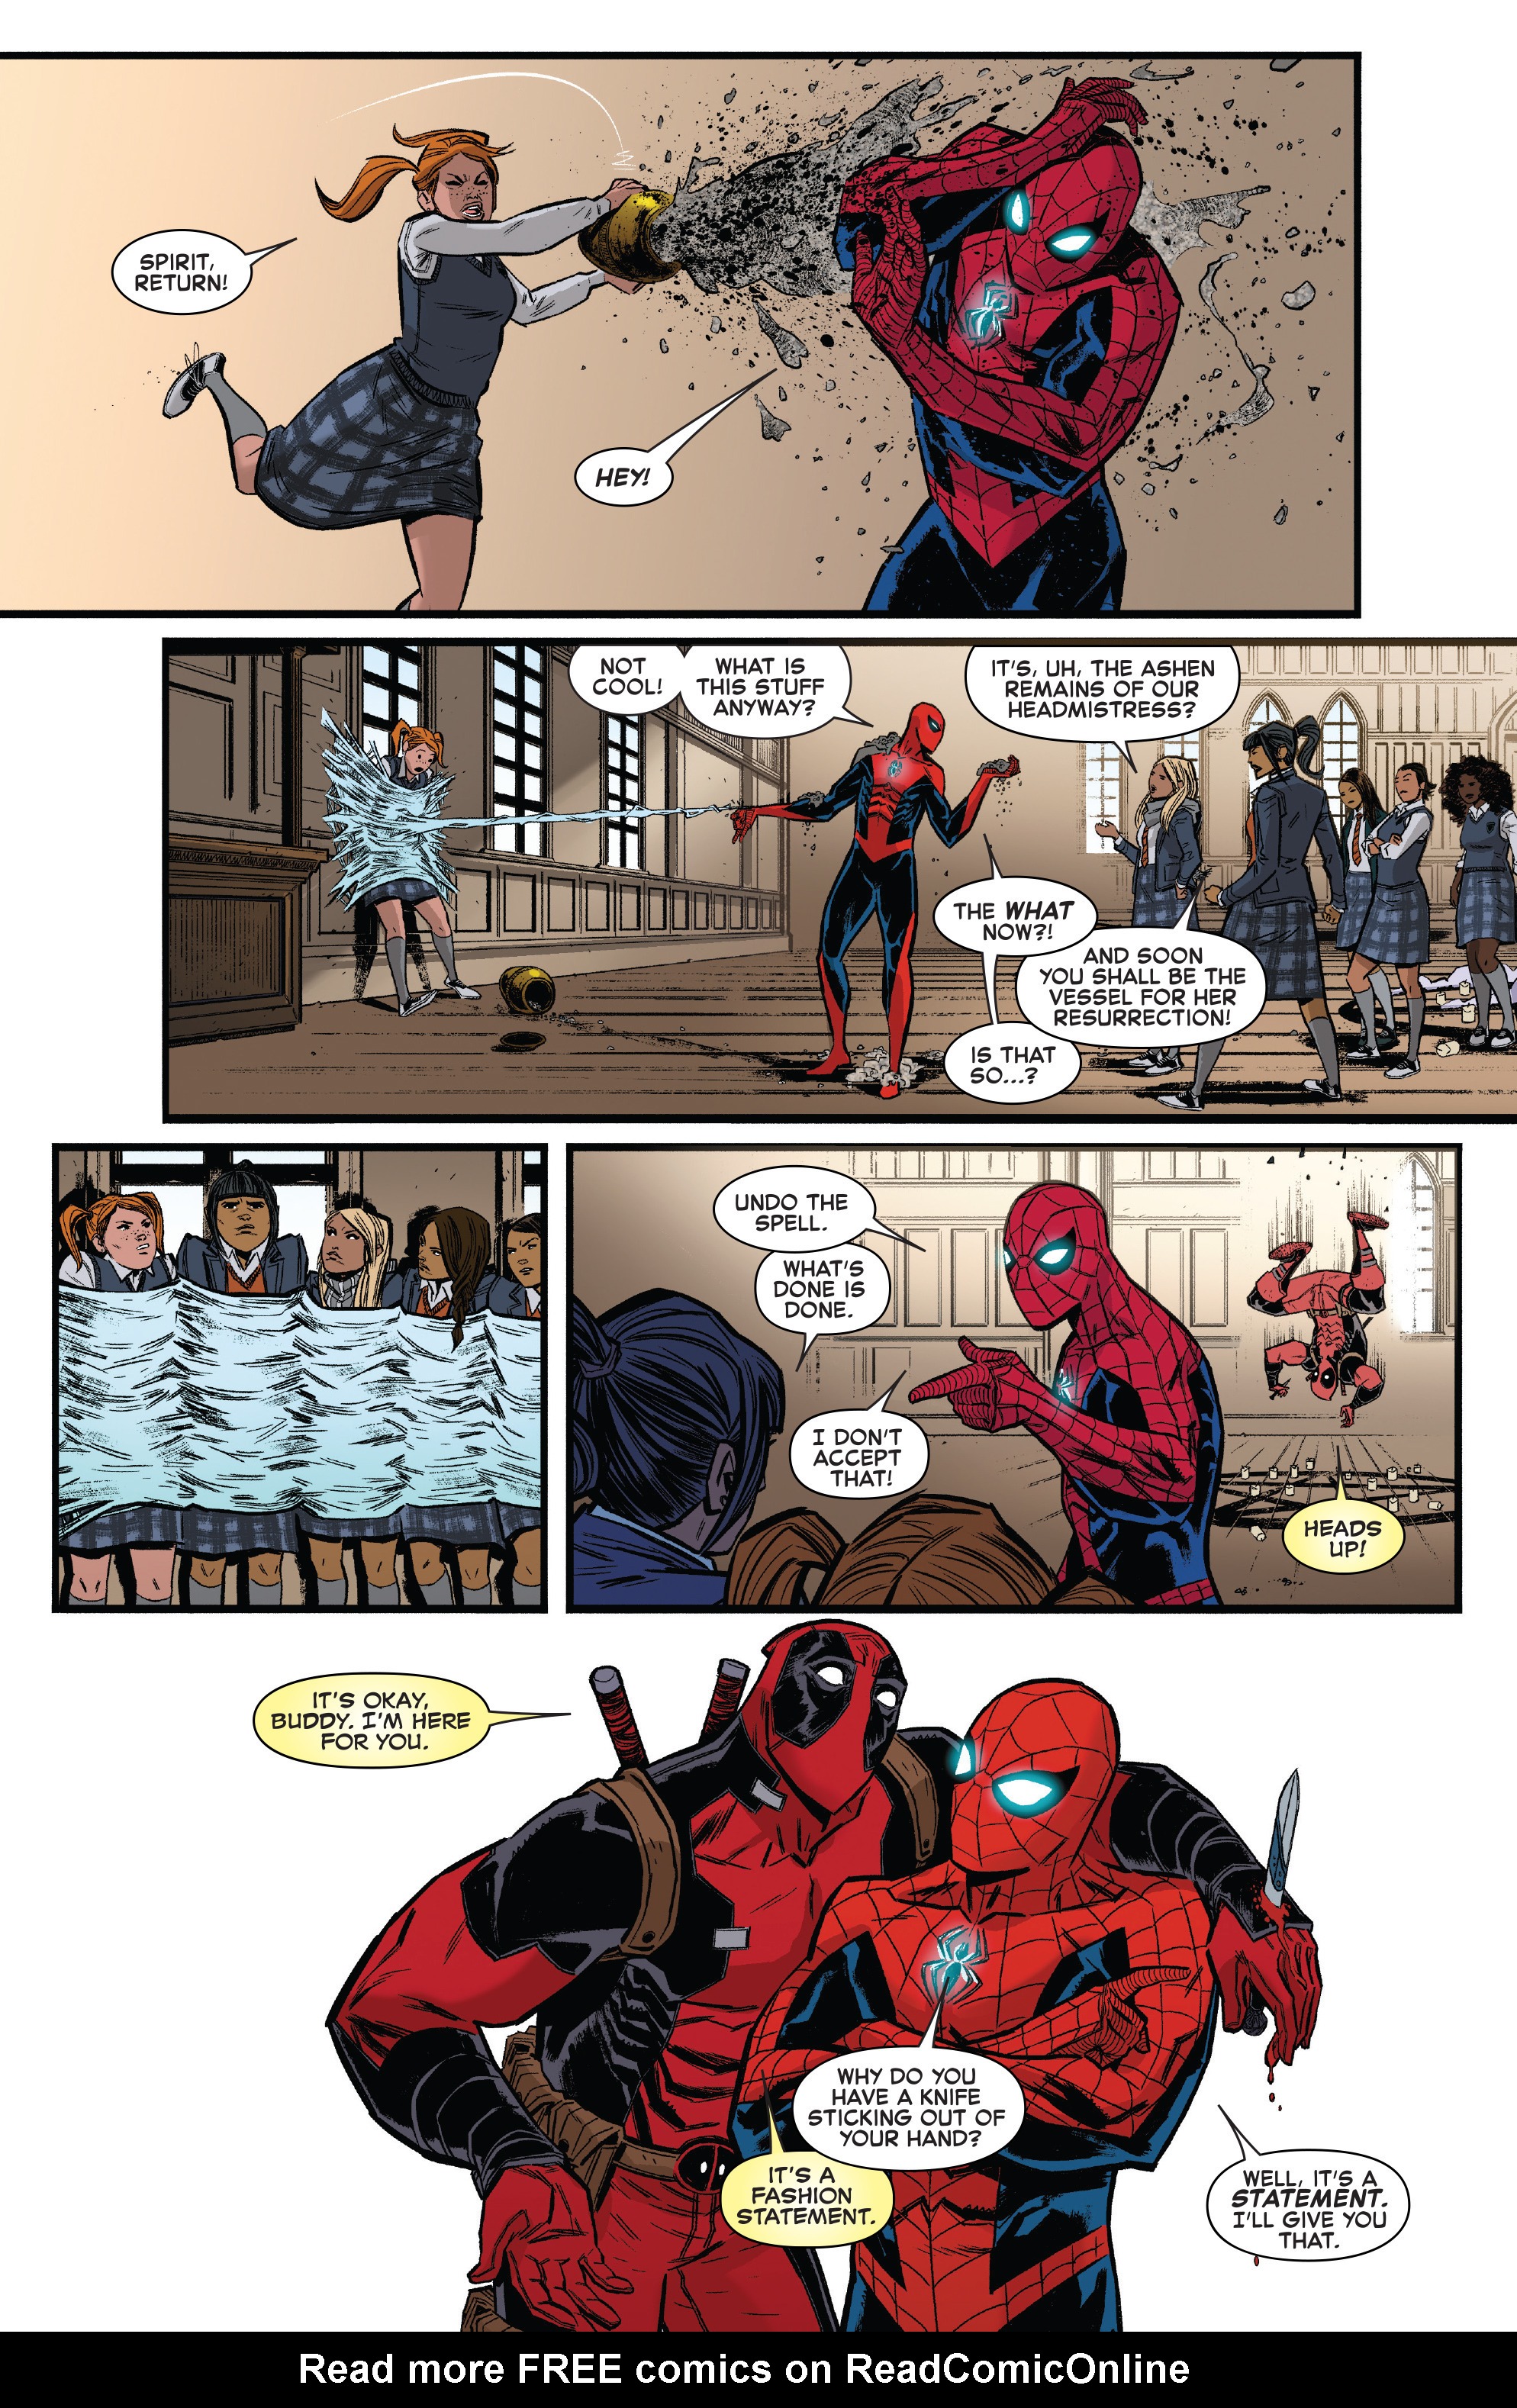 Spider Man Deadpool Issue 1 Mu | Read Spider Man Deadpool Issue 1 Mu comic  online in high quality. Read Full Comic online for free - Read comics online  in high quality .|